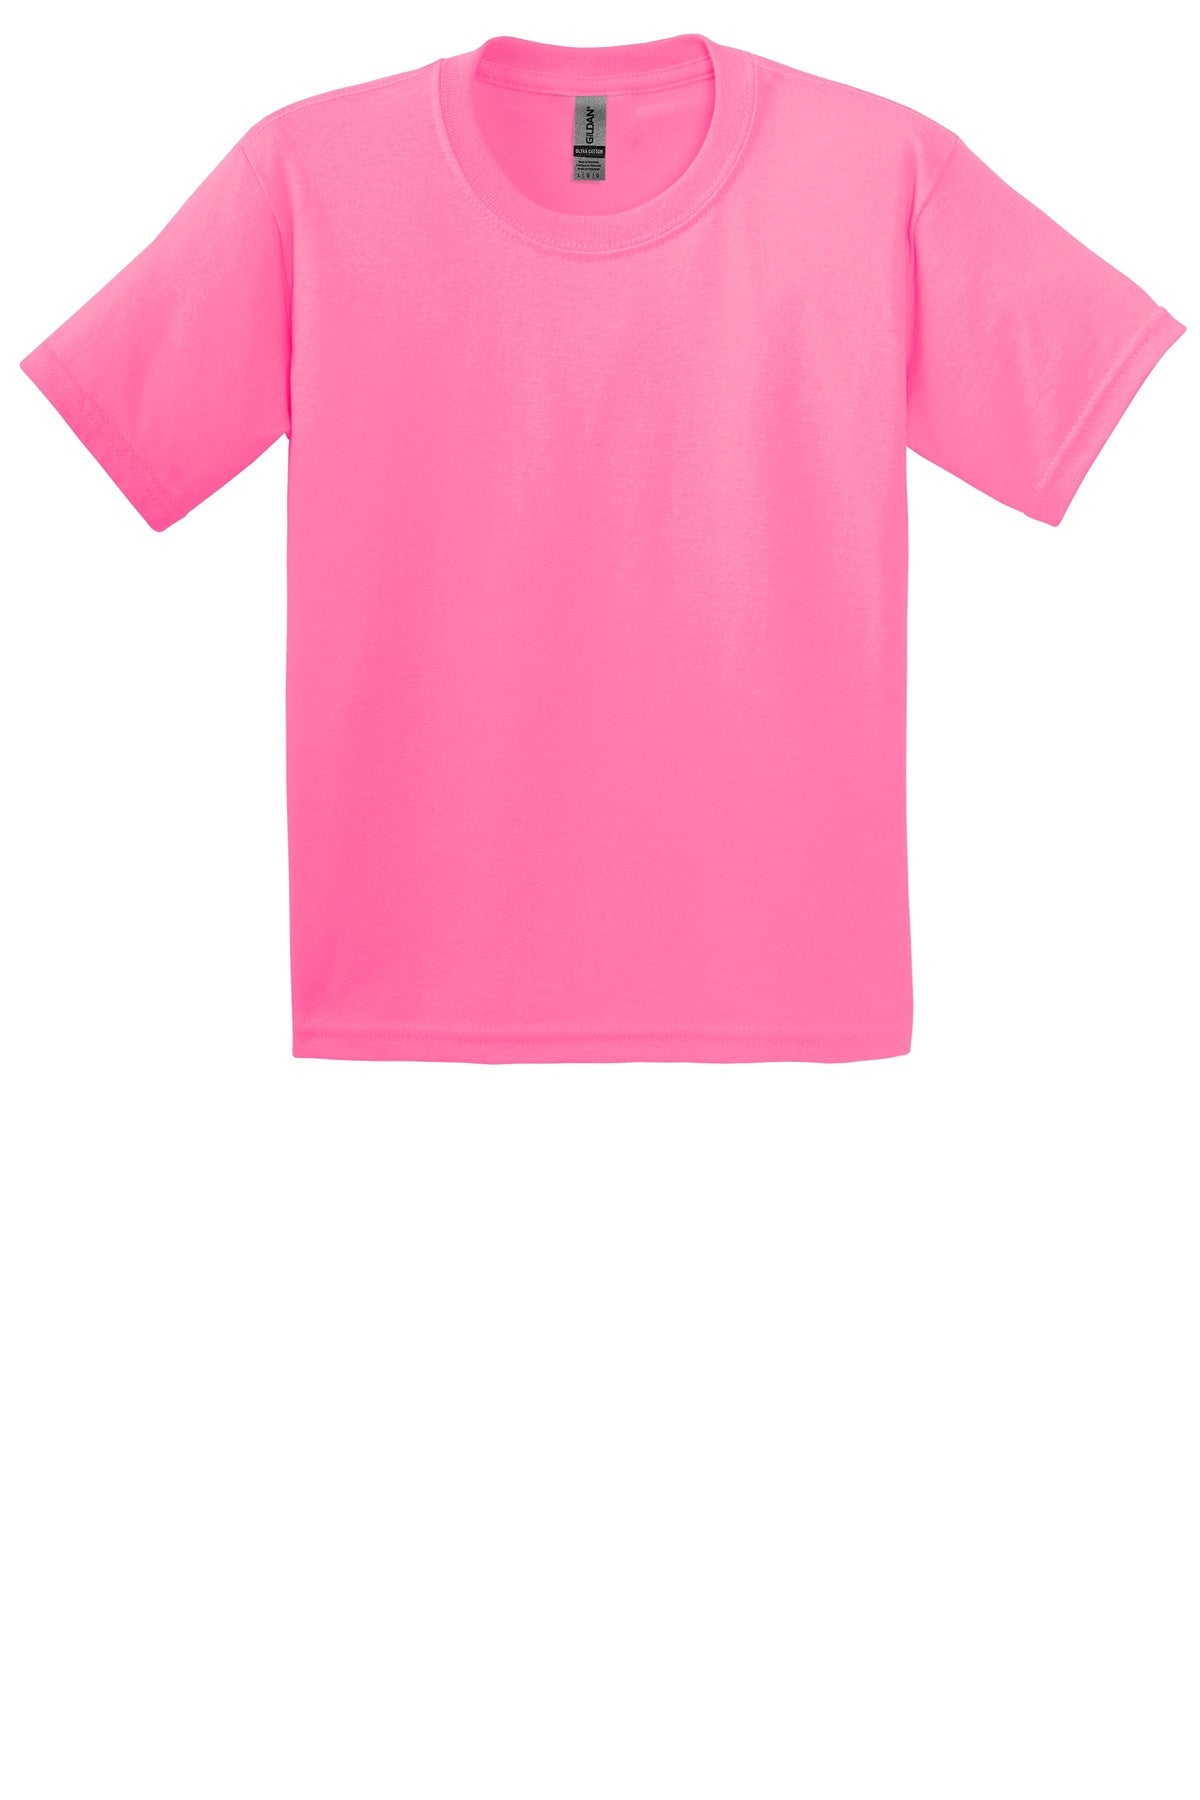 2000B Gildan® Youth Ultra Cotton® 100% US Cotton T-Shirt. XS-XL